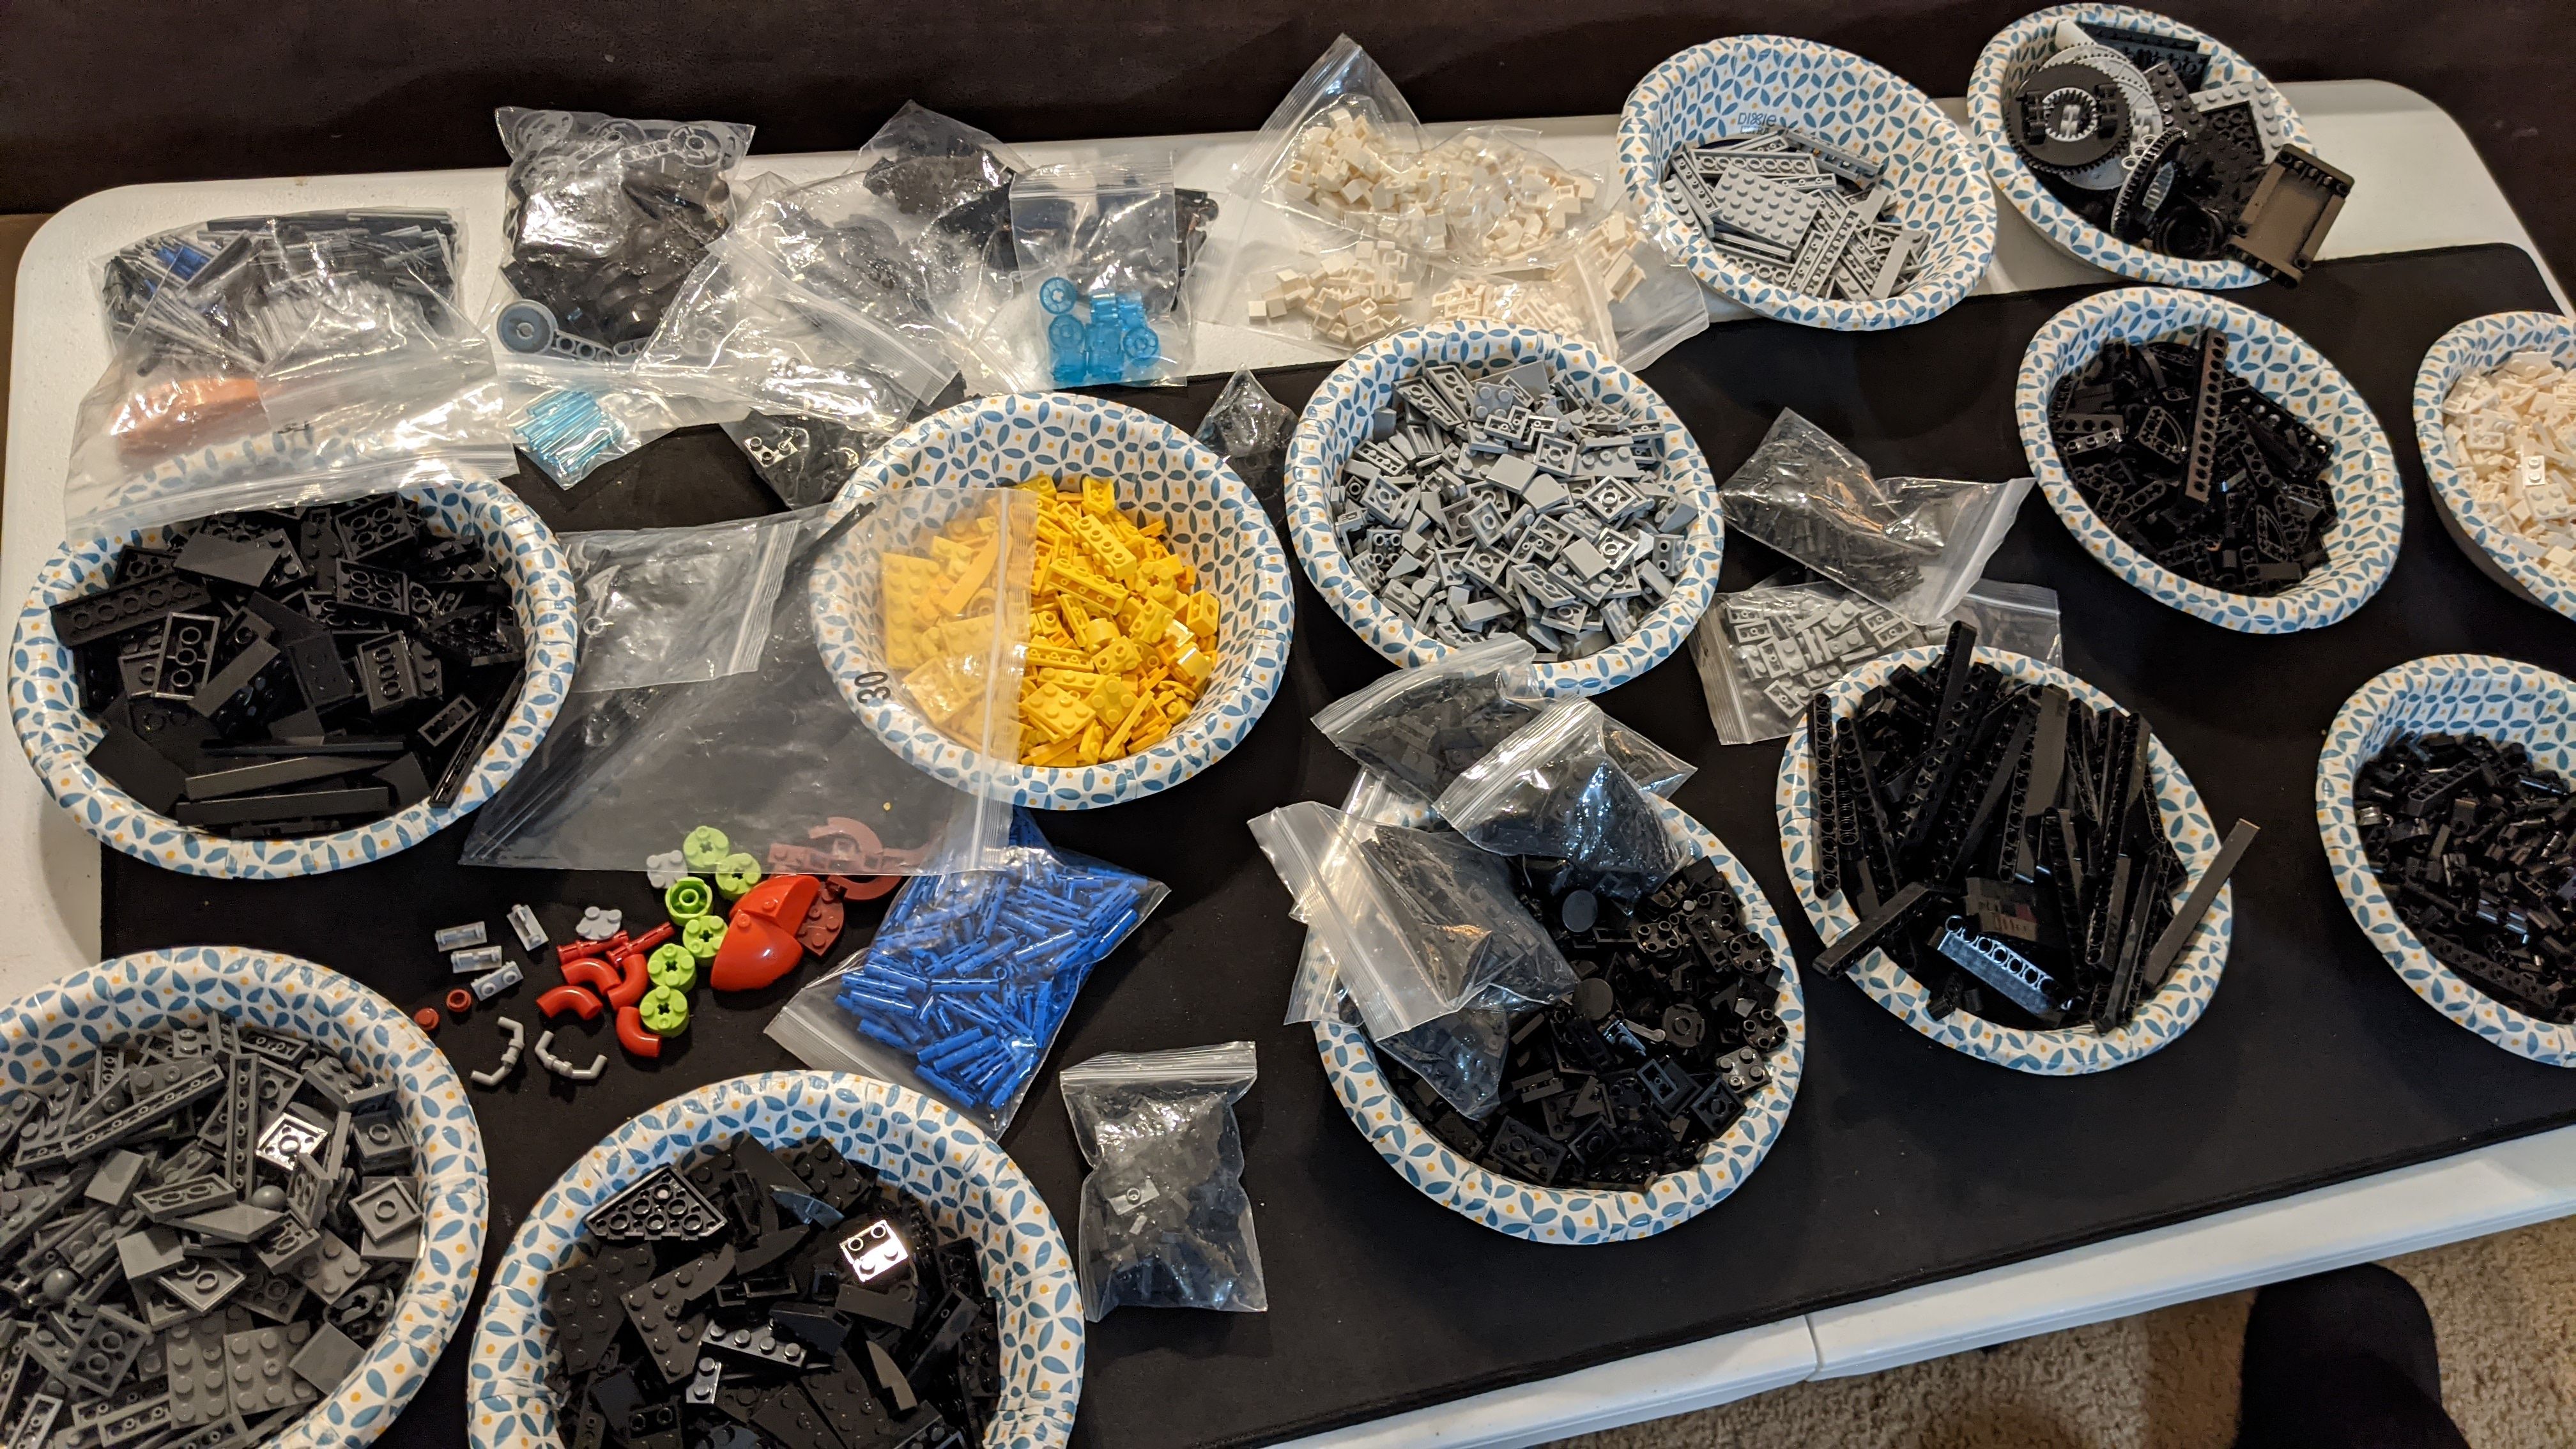 LEGO pieces arranged into bowls 